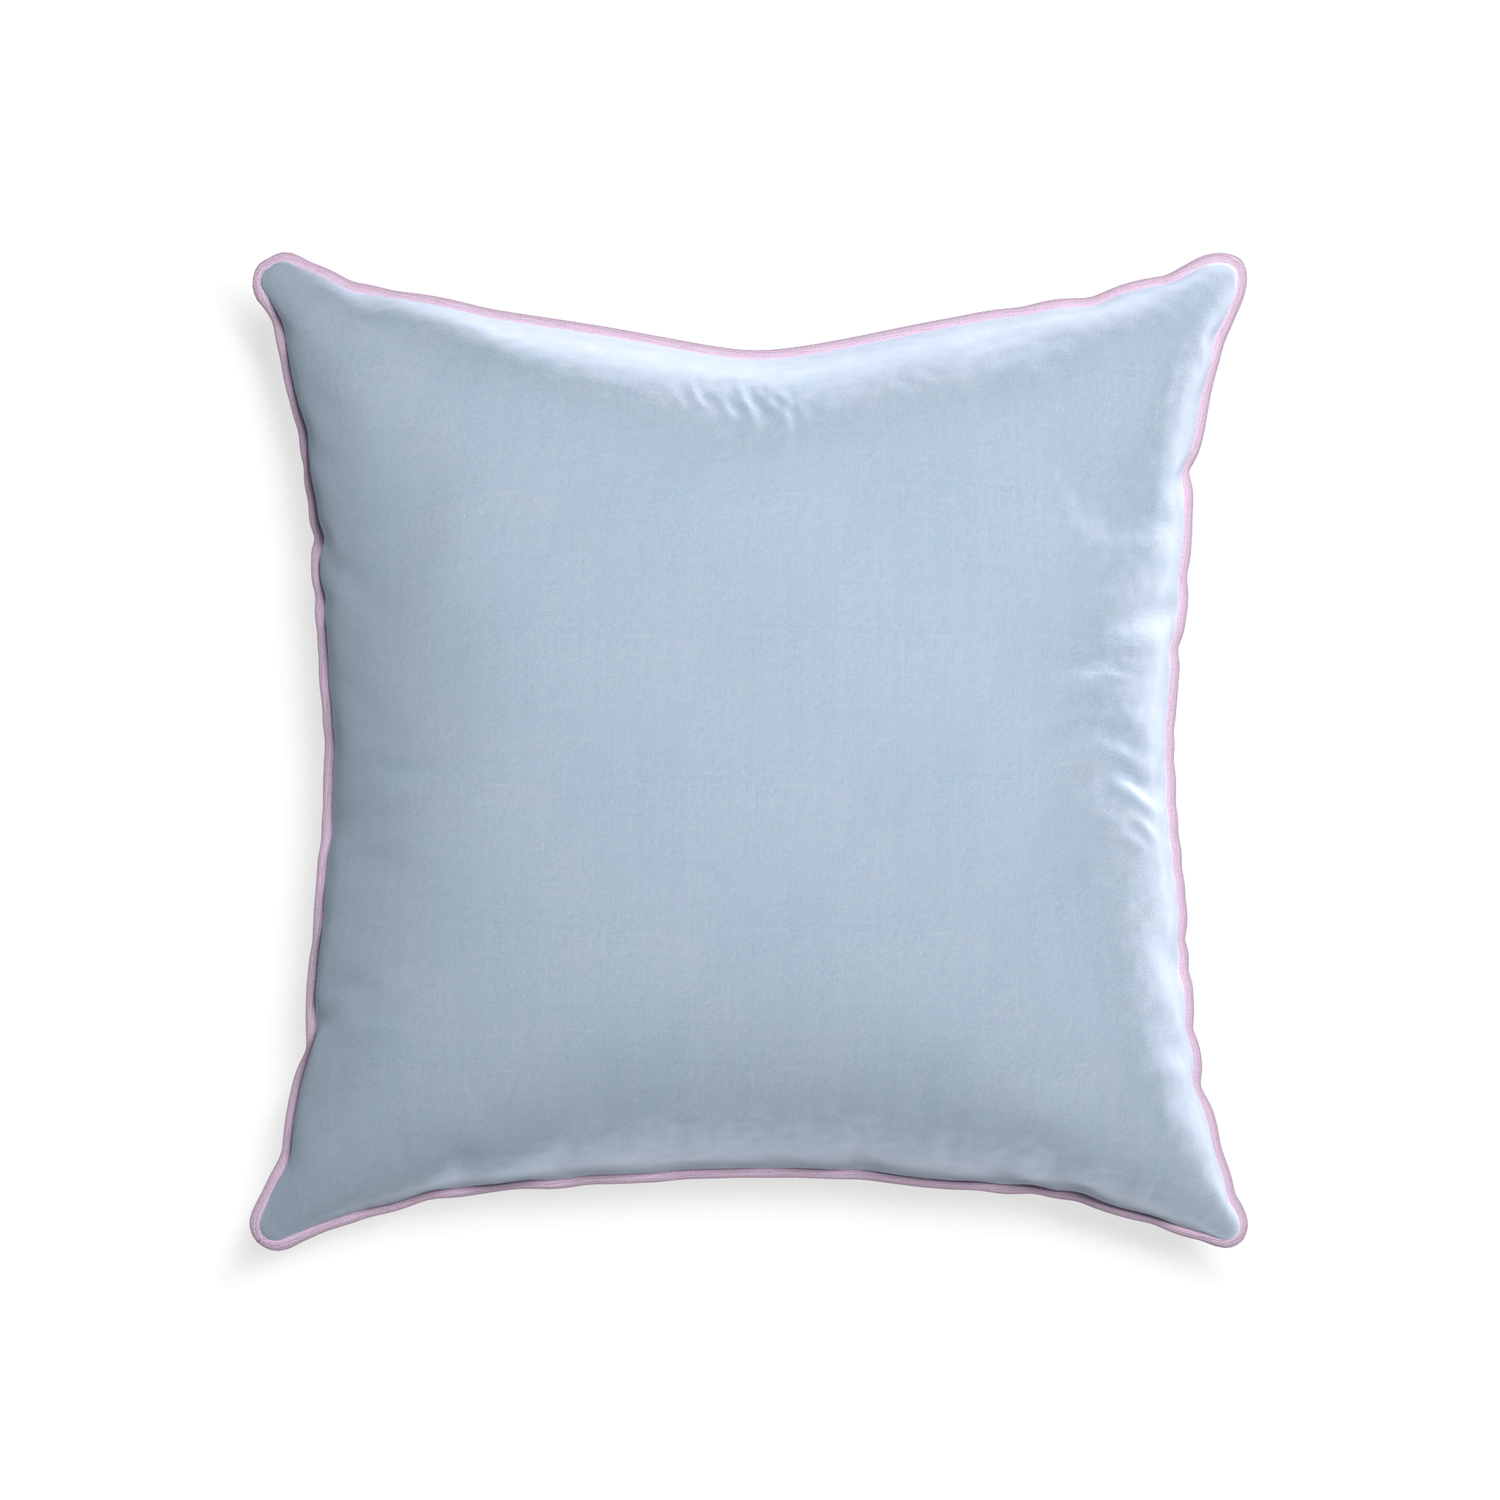 22-square sky velvet custom pillow with l piping on white background